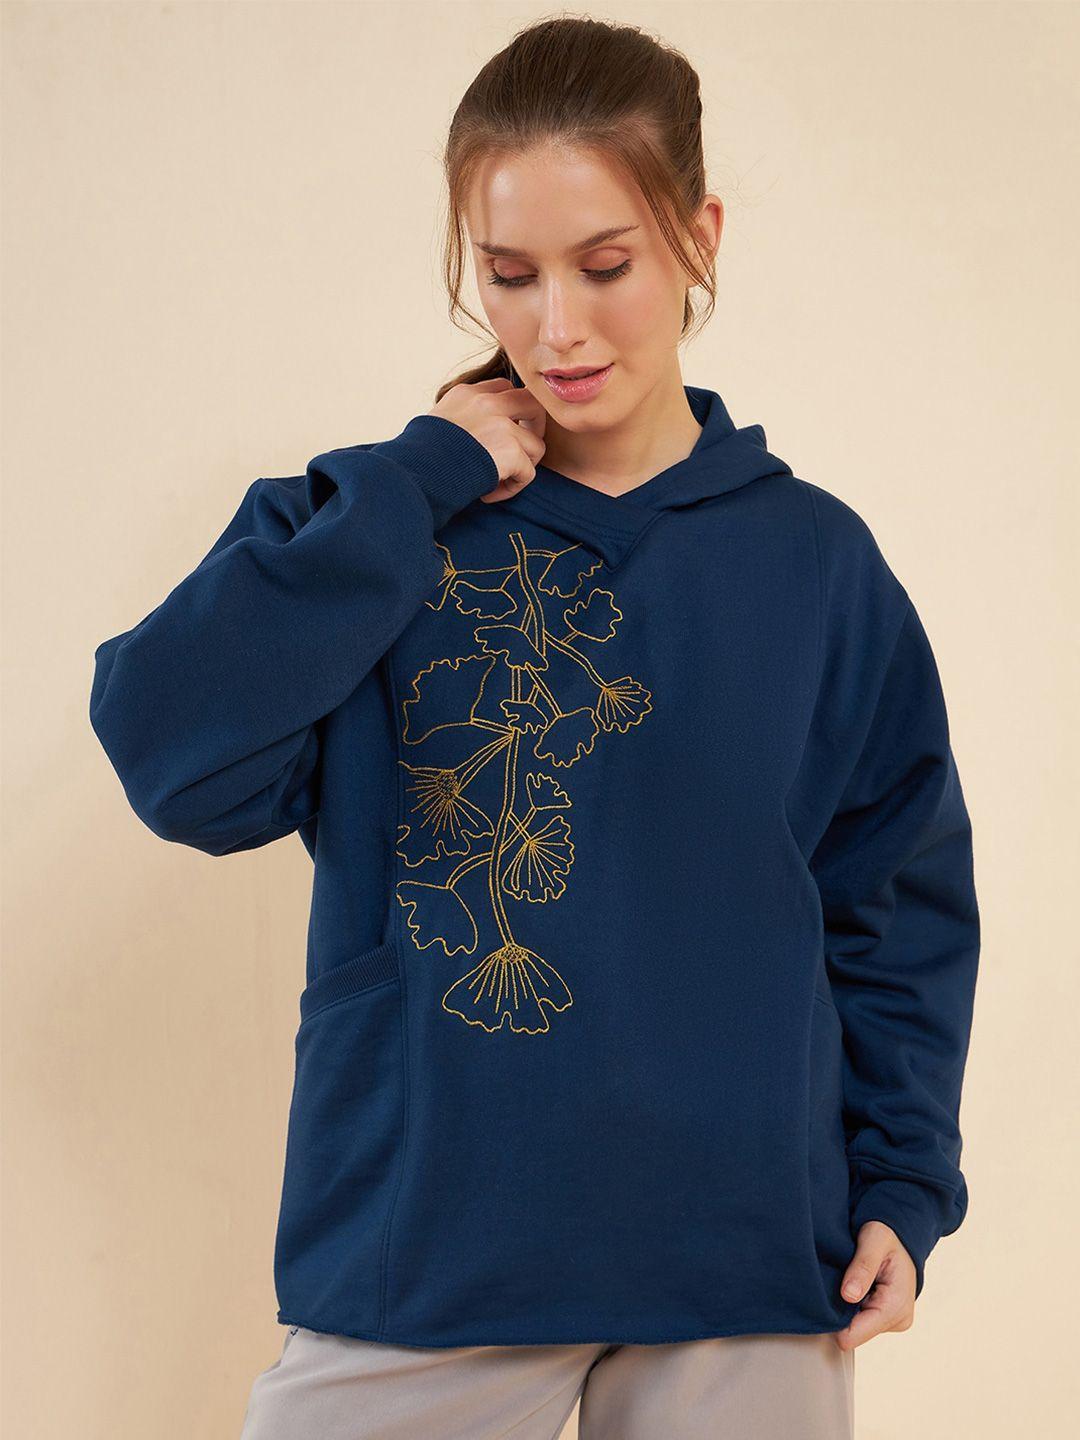 antheaa navy blue floral embroidered hooded fleece sweatshirt